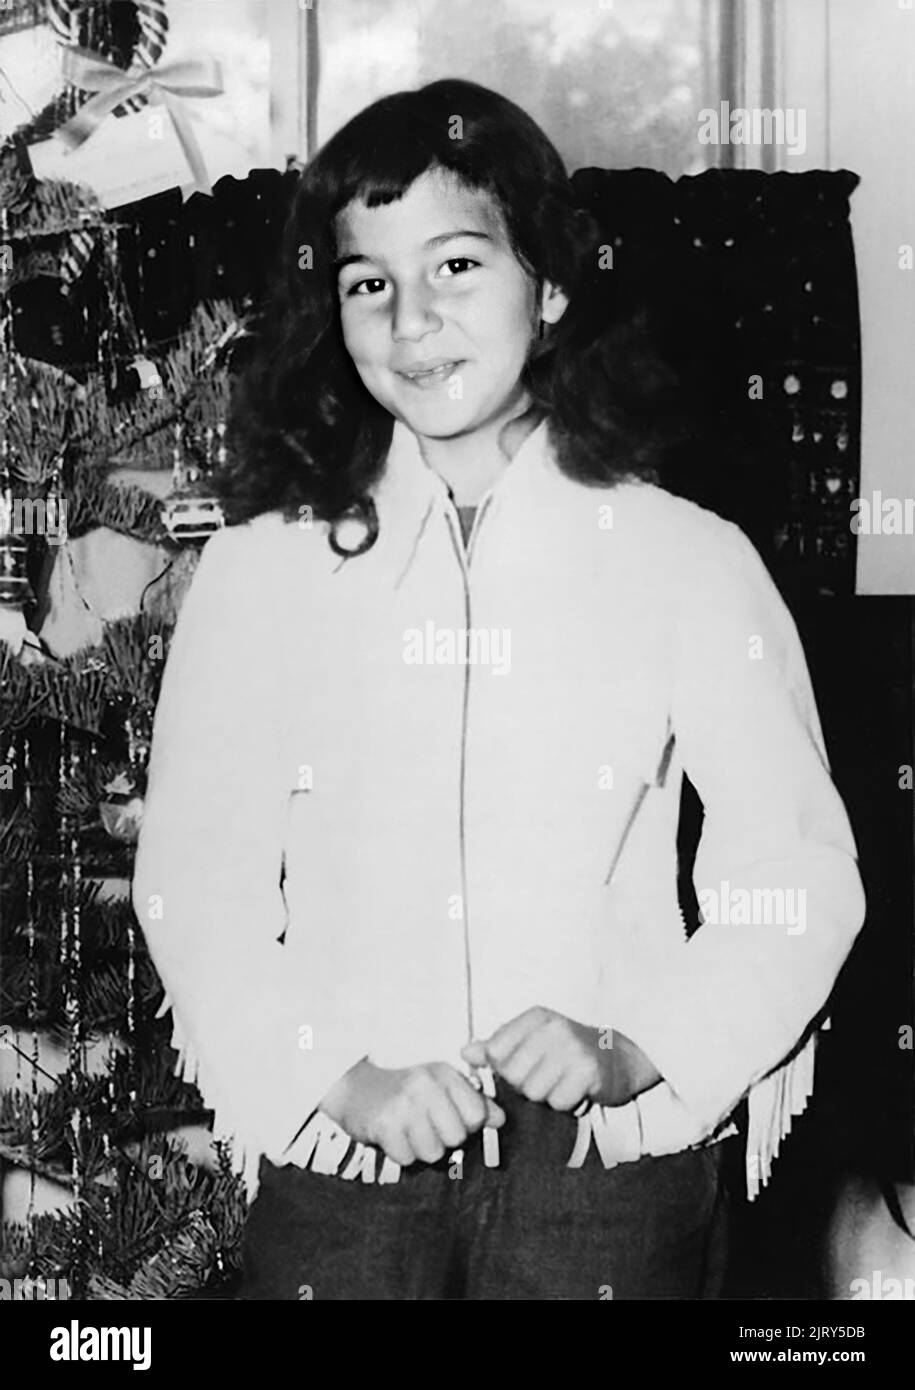 1956 , december , USA : The celebrated american Pop singer and actress  CHER ( Cherilyn Sarkisian LaPierre , born 20 may 1946 ) when was a young girl aged 10 at Xmas  . Unknown photographer. - HISTORY - FOTO STORICHE - personalità da giovane giovani - ragazza - personality personalities when was young girl - INFANZIA - CHILDHOOD - POP MUSIC - MUSICA - cantante - BAMBINI - BAMBINA - CHILD - CHILDREN - BAMBINO - CHILDHOOD - INFANZIA - smile - sorriso - ALBERO DI NATALE - Christmas Tree --- ARCHIVIO GBB Stock Photo